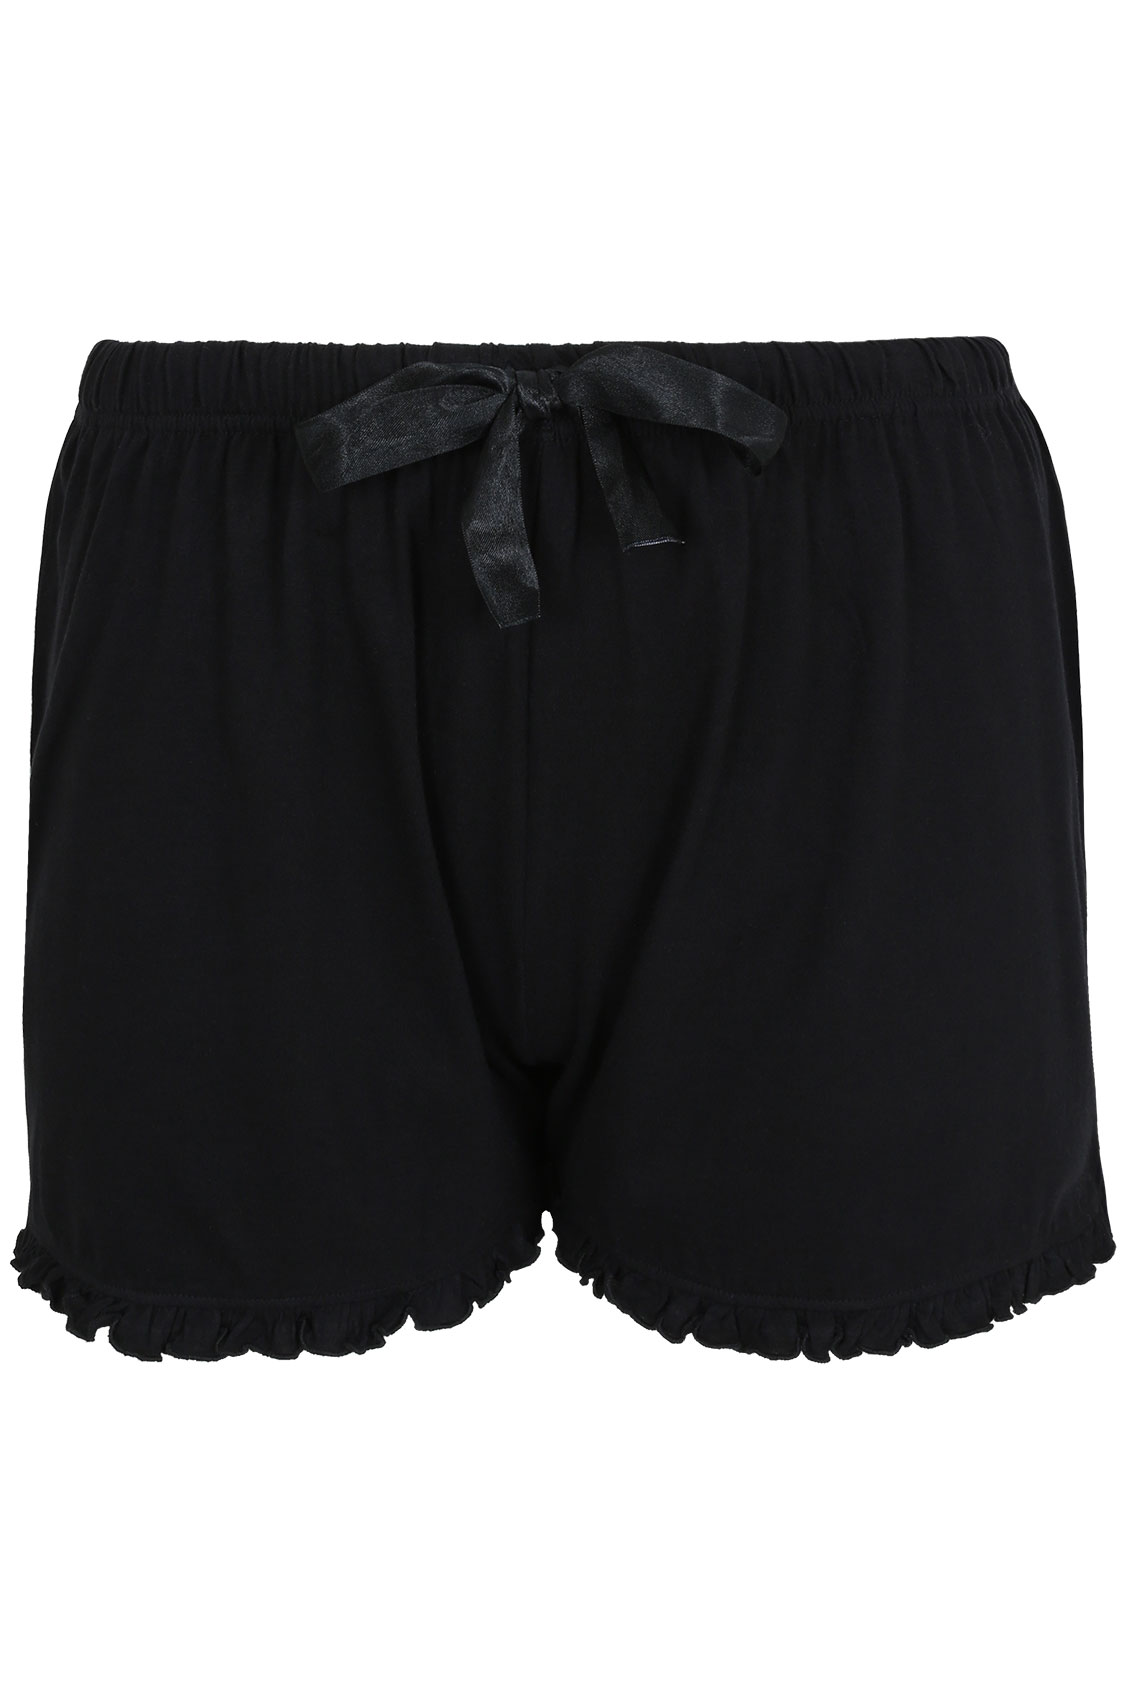 Plus Size Black Cotton Frilll Trim Pyjama Shorts